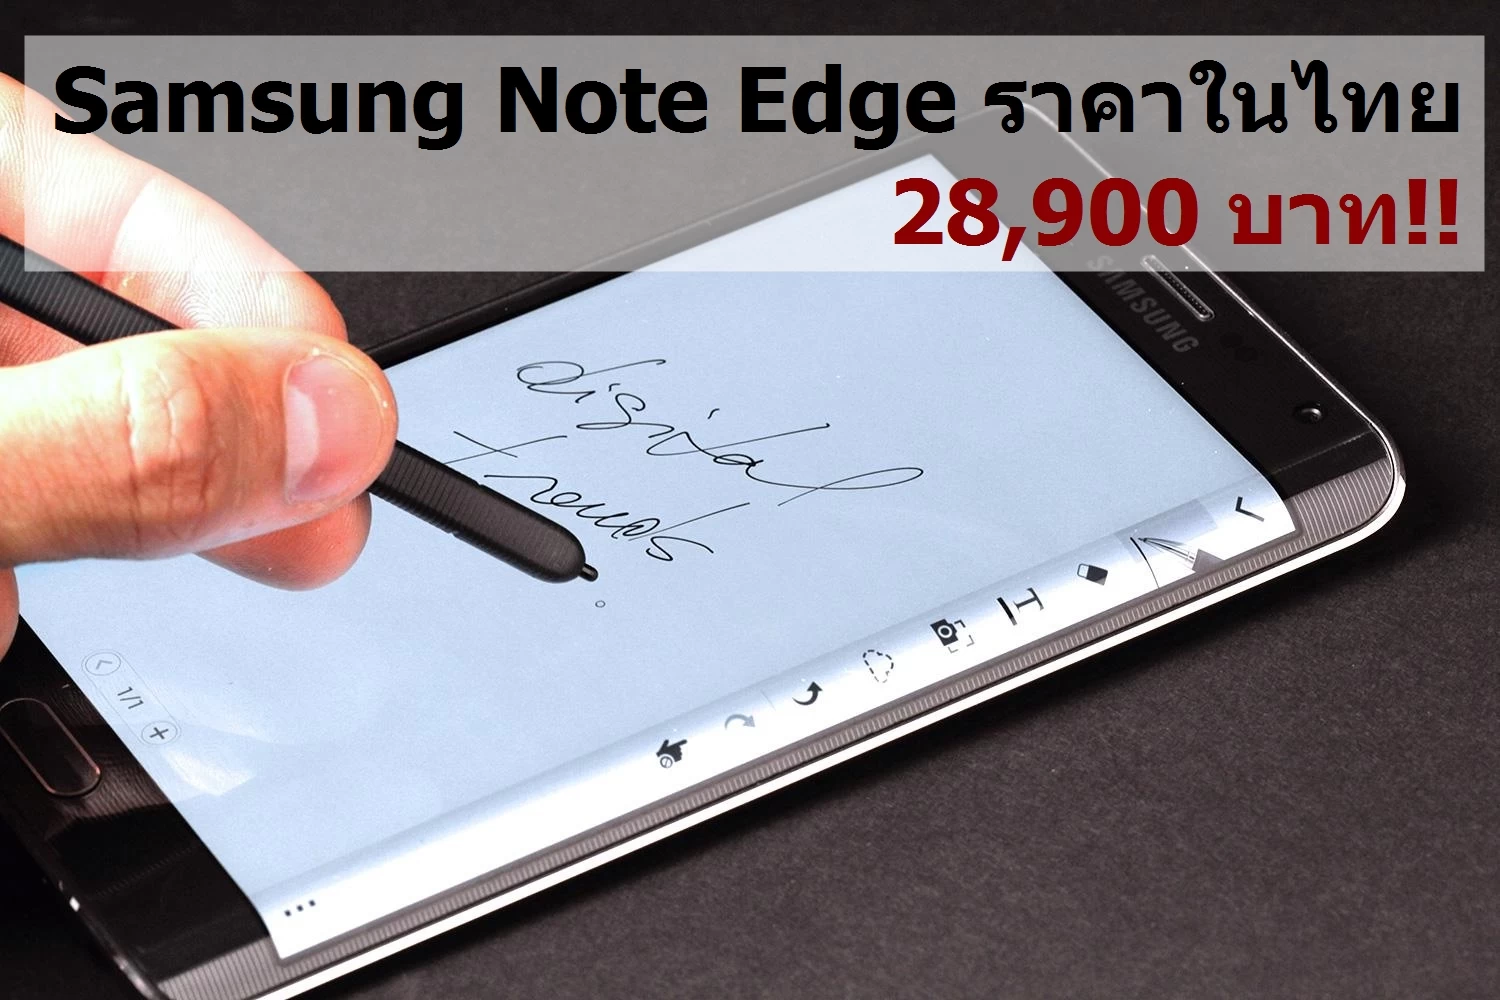 Samsung Galaxy Note EDGE Samsung Unveils Phone Review3 | Samsung Galaxy Note Edge | ประกาศราคา!! Samsung Galaxy Note Edge ในประเทศไทยแล้ว 28,900 บาท พร้อมวันจำหน่าย